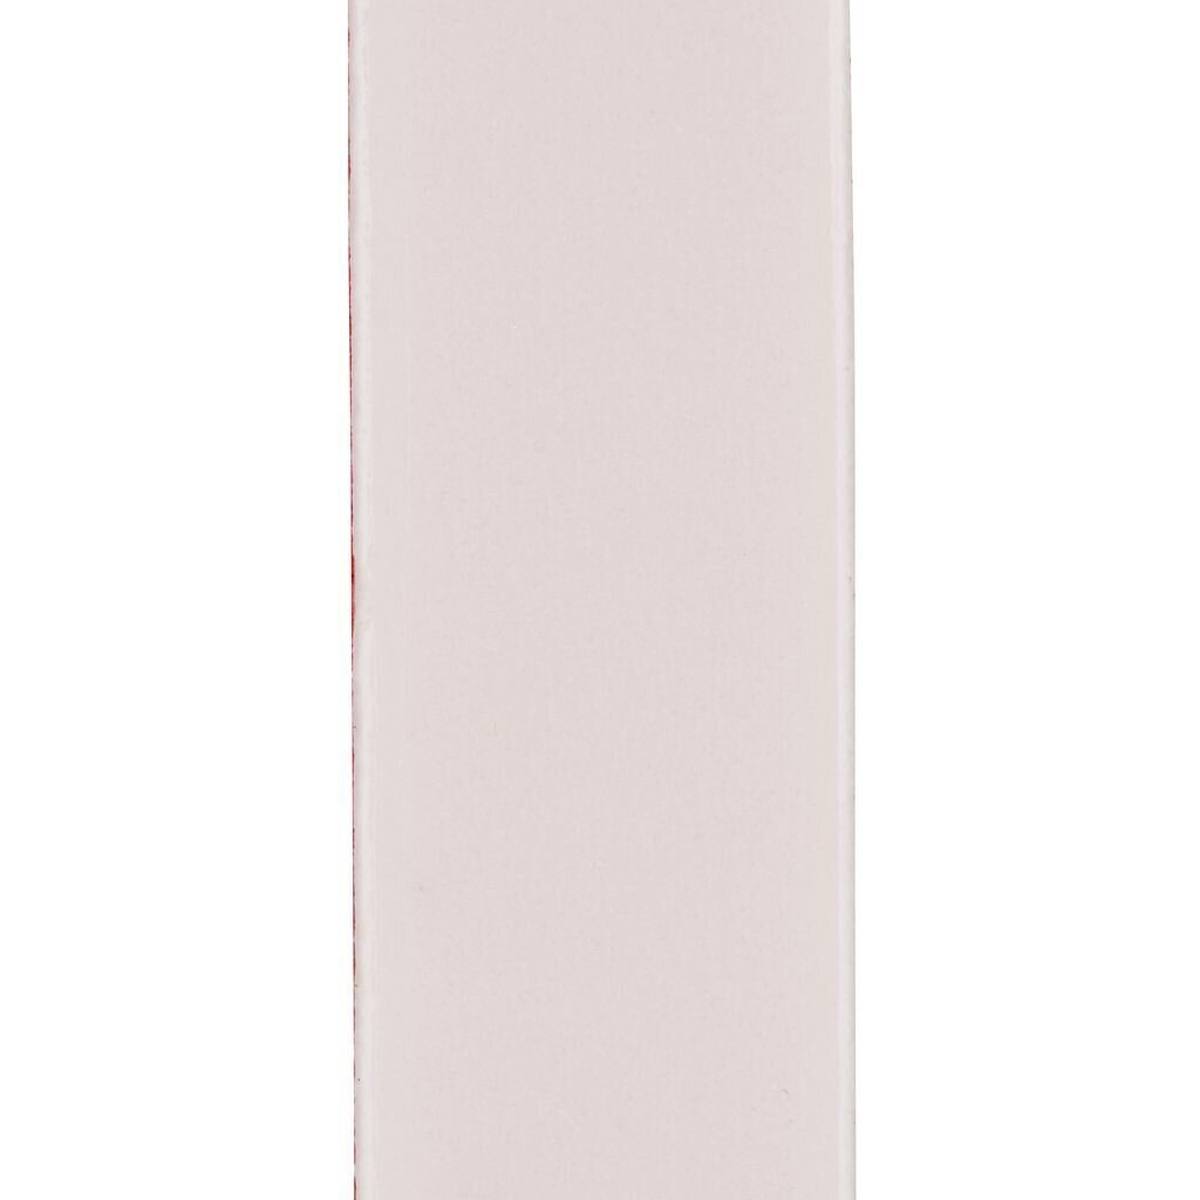 Nastro adesivo 3M VHB LSE-160WF, bianco, 12 mm x 33 m, 1,6 mm